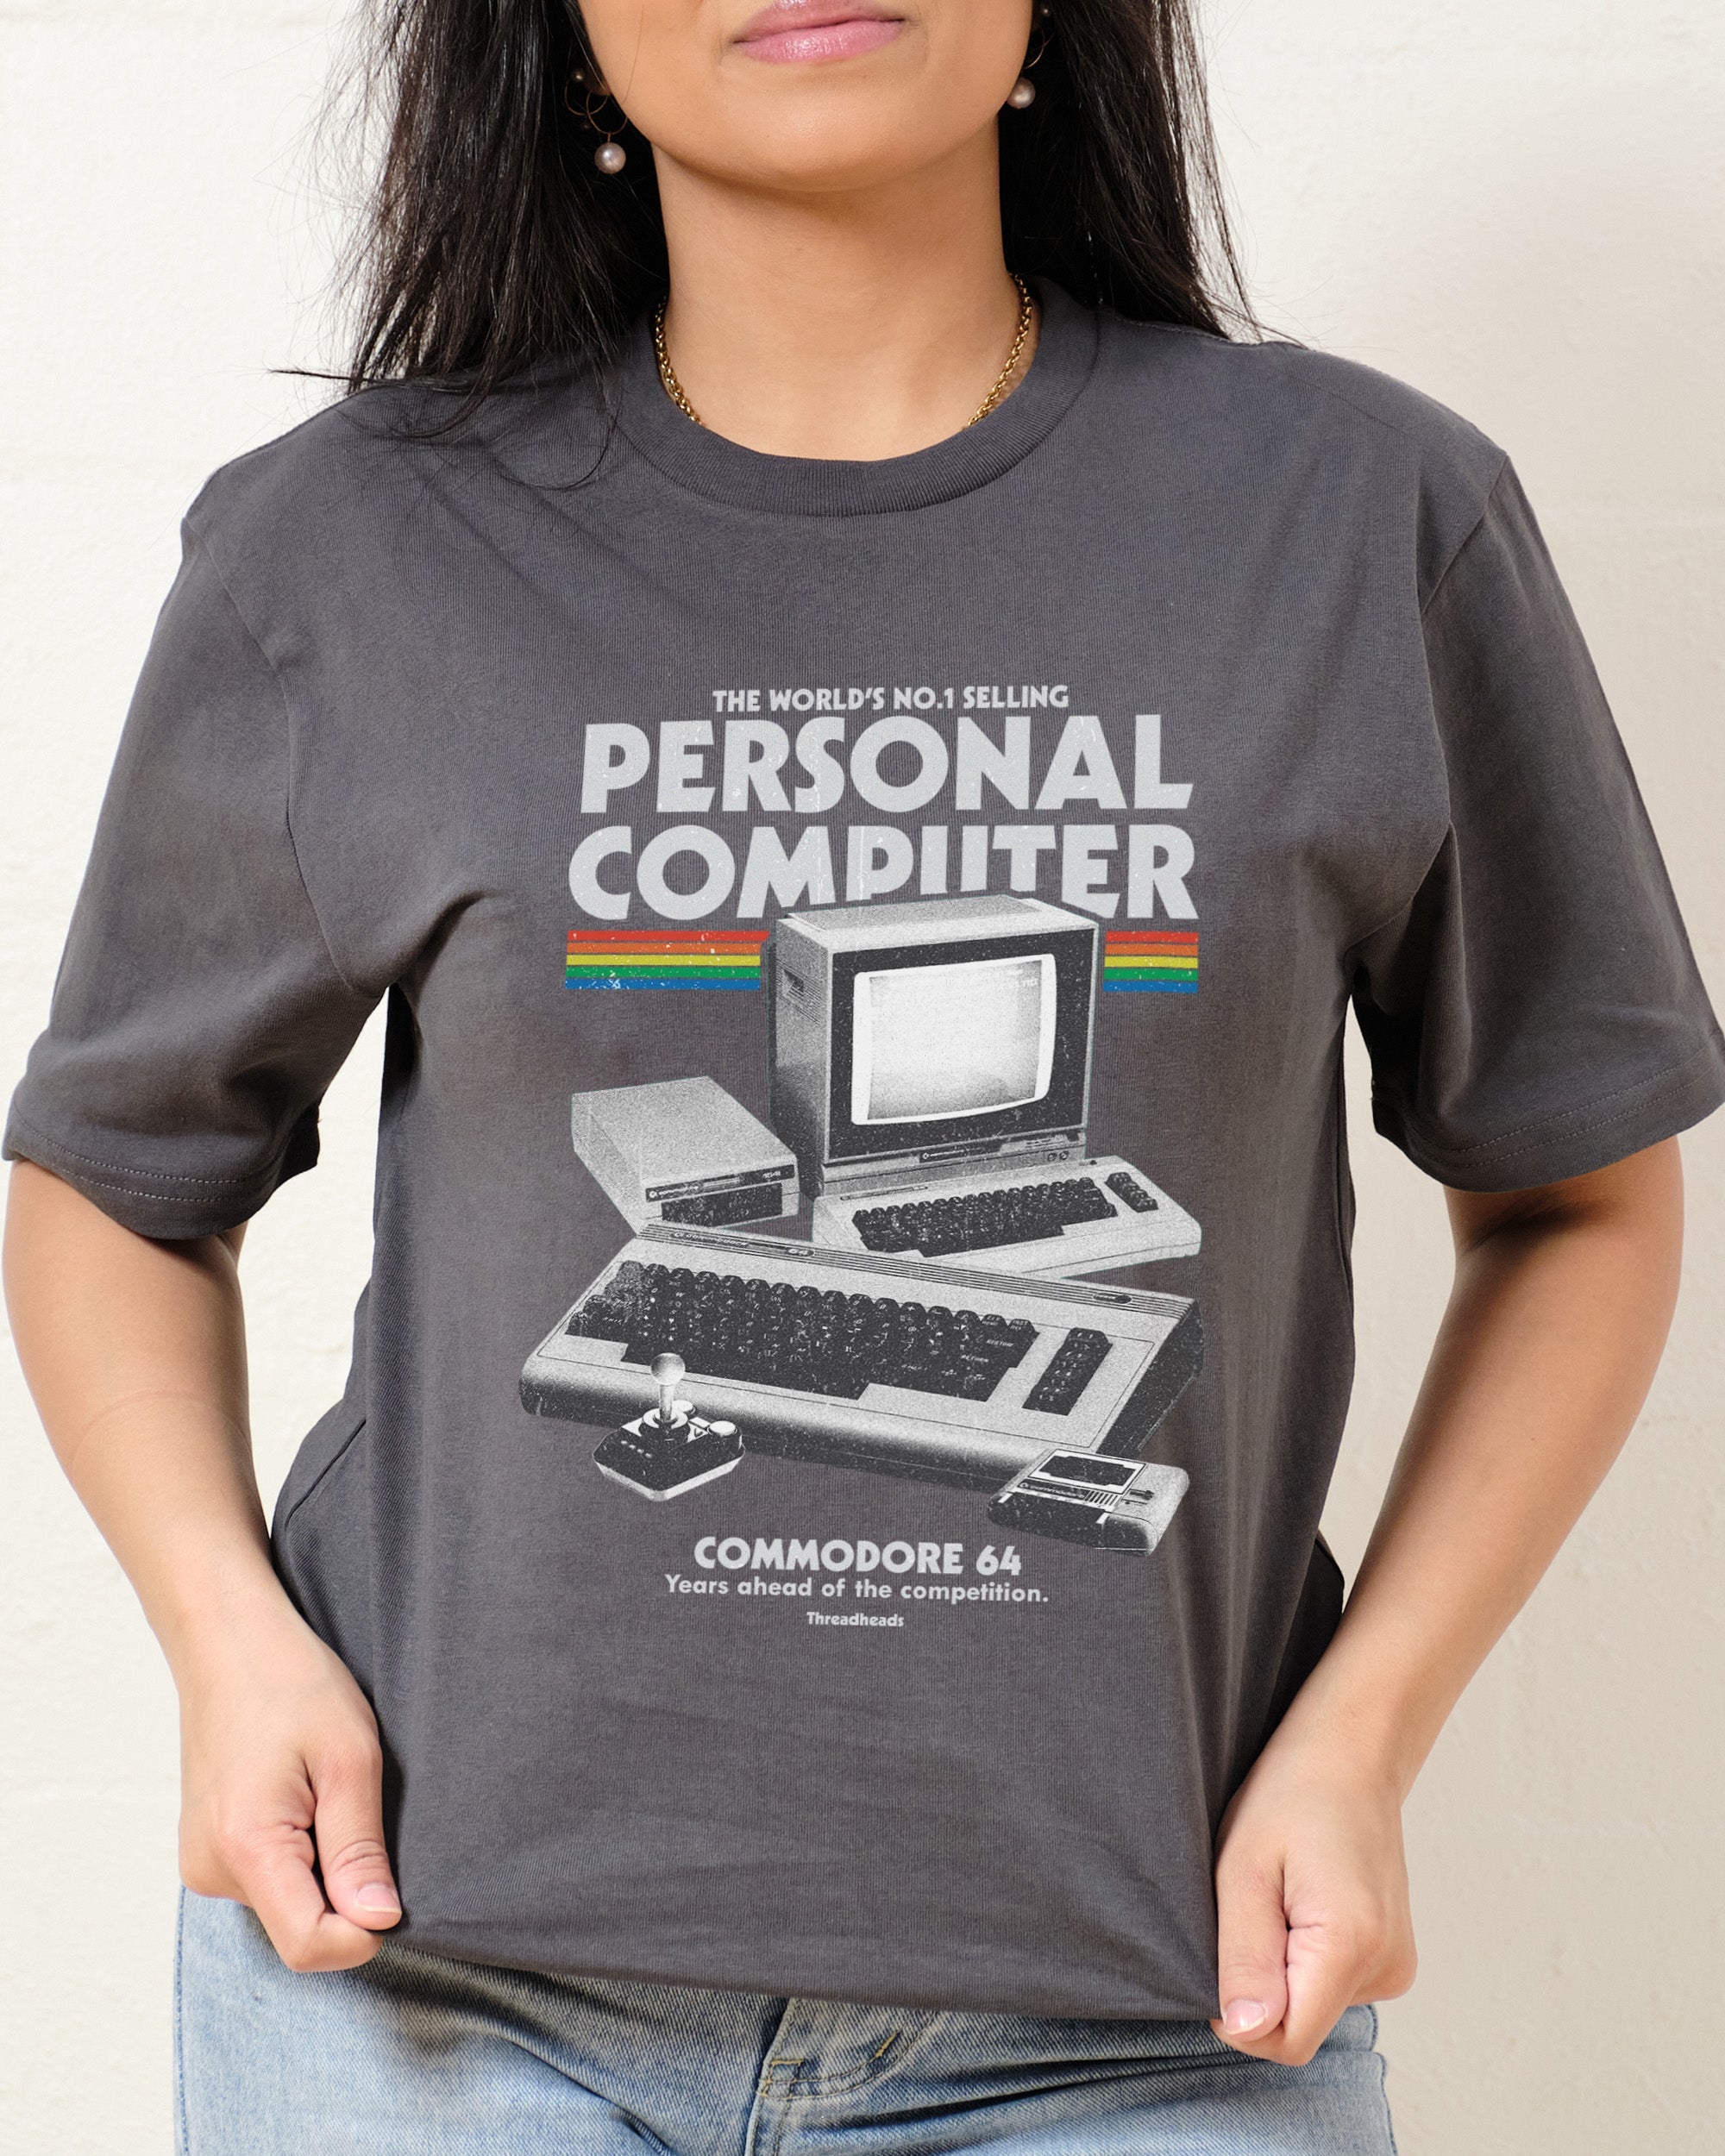 Retro Commodore 64 T-Shirt Australia Online CharCharcoal